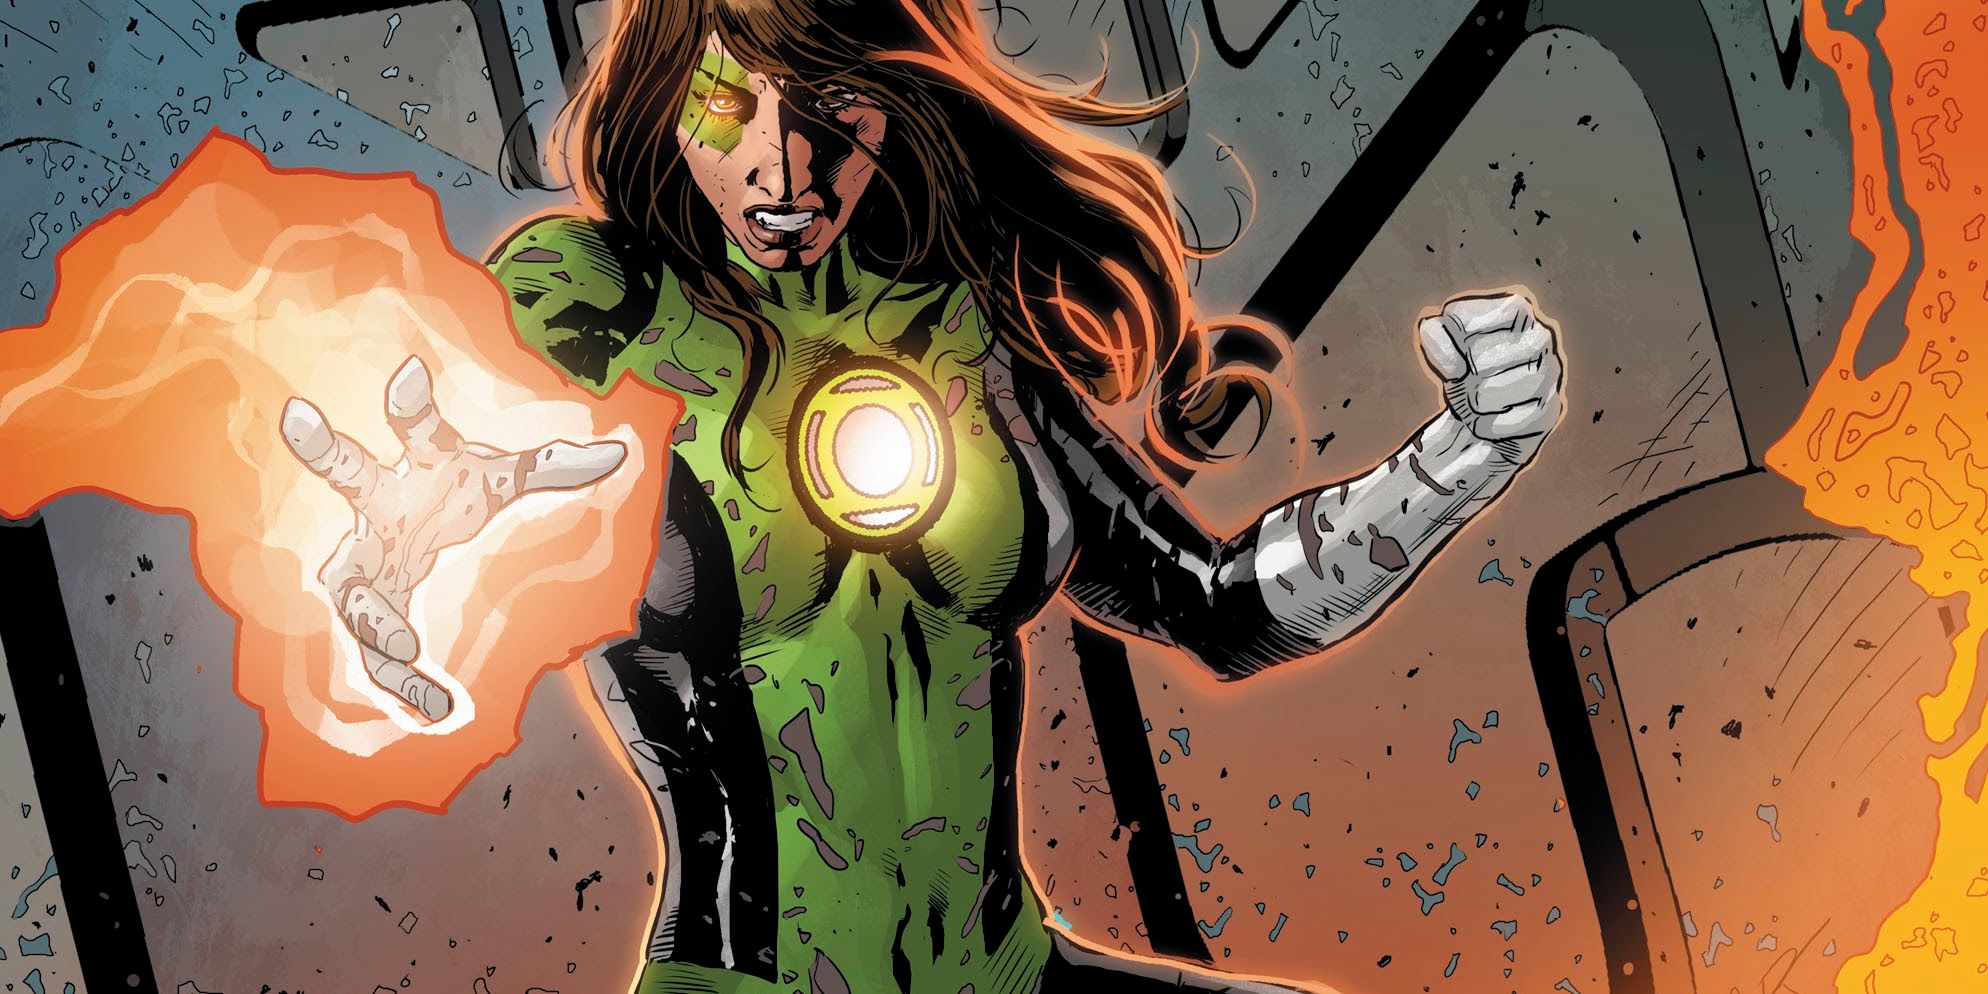 Jessica Cruz as Omega Lantern in DC Comics